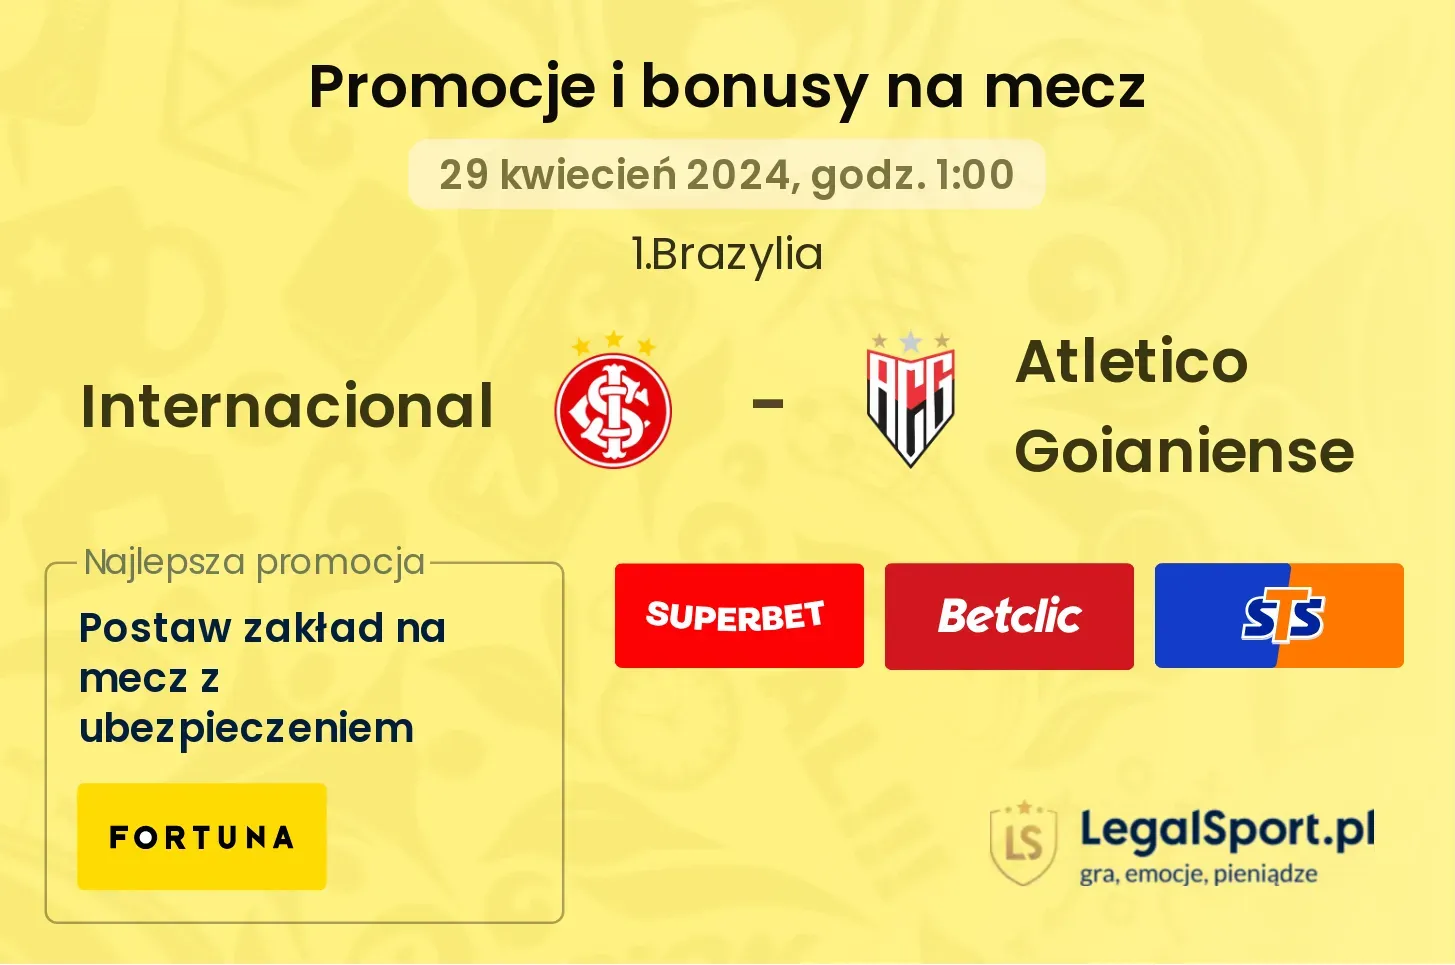 Internacional - Atletico Goianiense  promocje bonusy na mecz